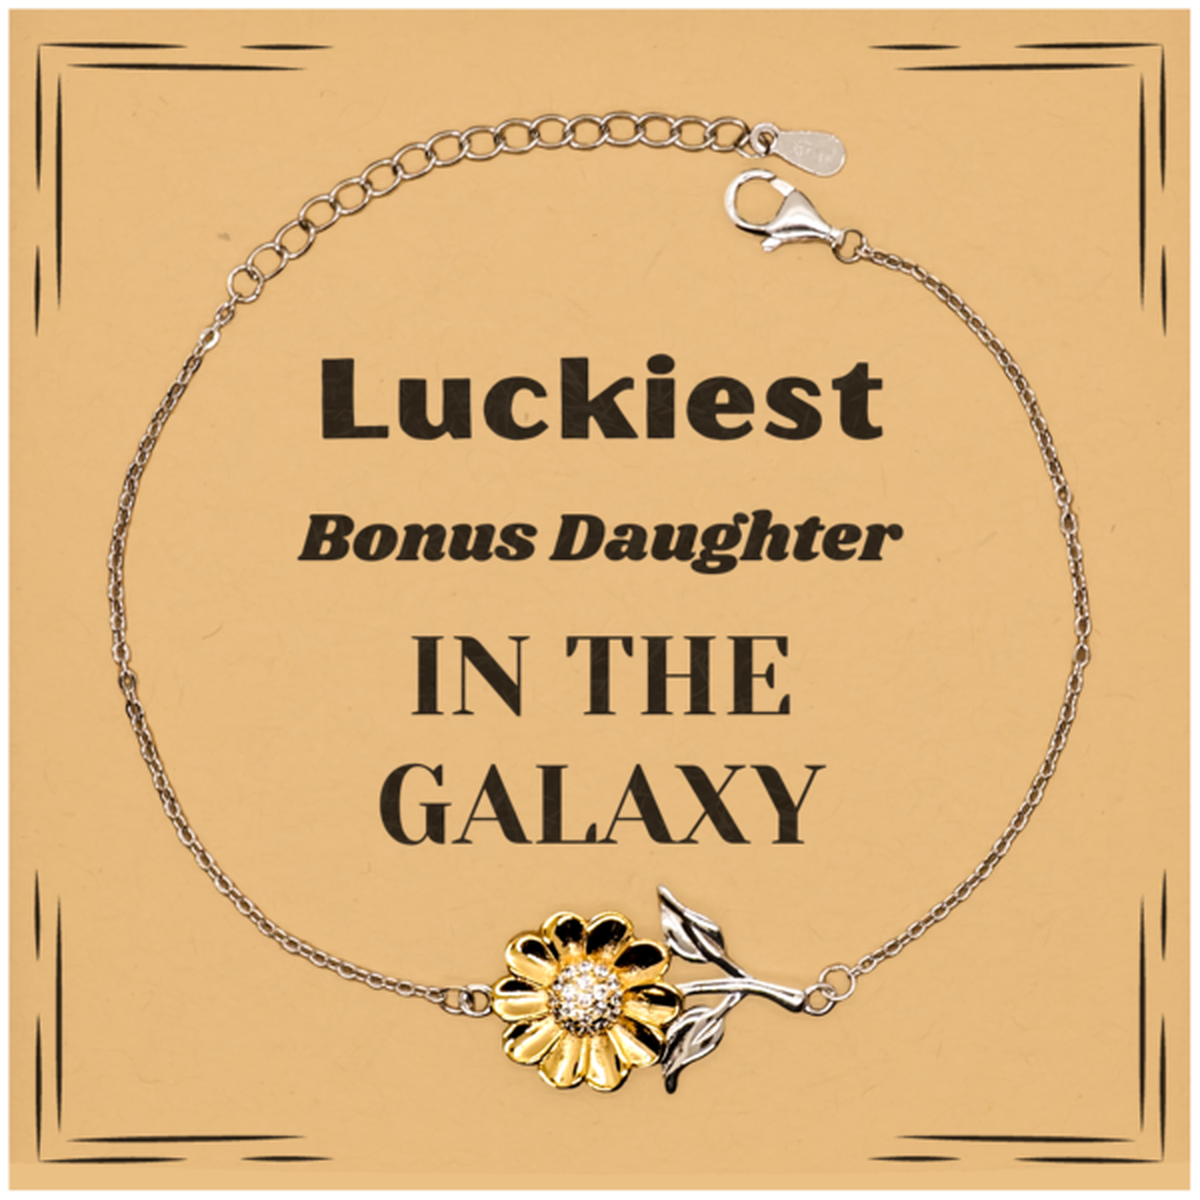 Luckiest Bonus Daughter in the Galaxy, To My Bonus Daughter Message Card Gifts, Christmas Bonus Daughter Sunflower Bracelet Gifts, X-mas Birthday Unique Gifts For Bonus Daughter Men Women